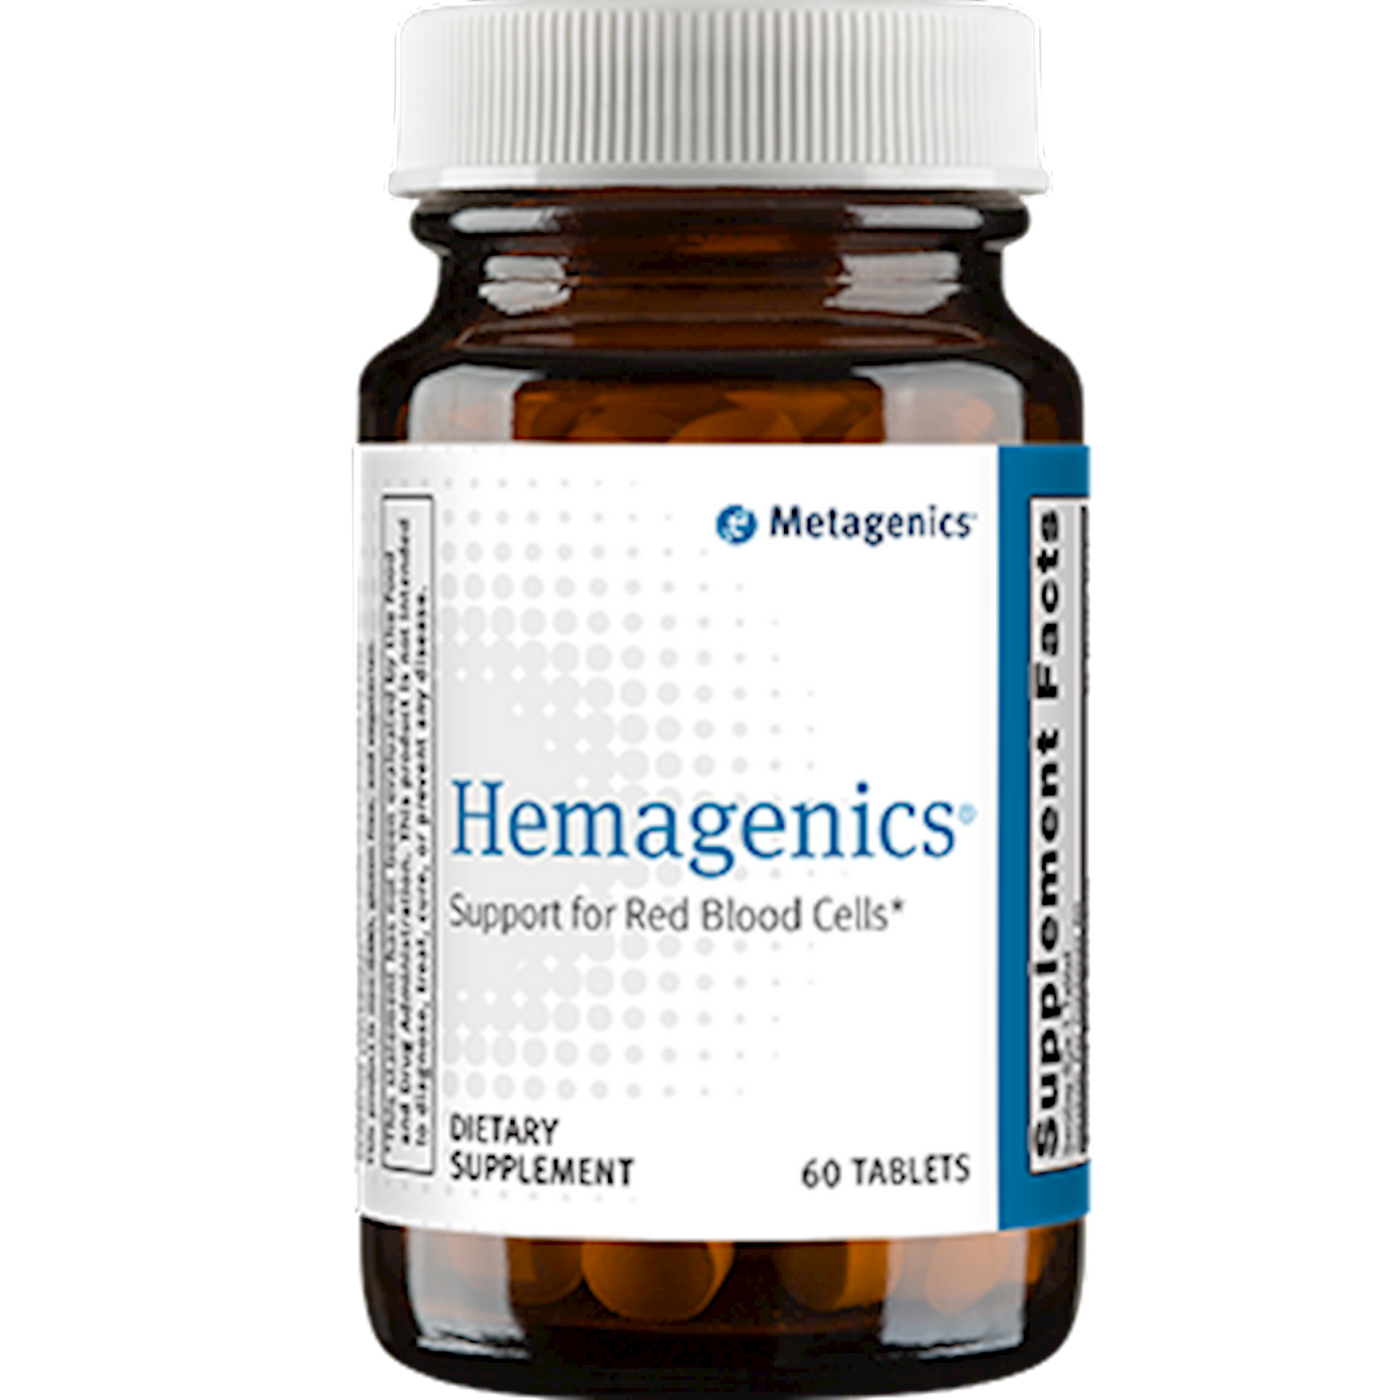 Hemagenics 60 tabs Curated Wellness